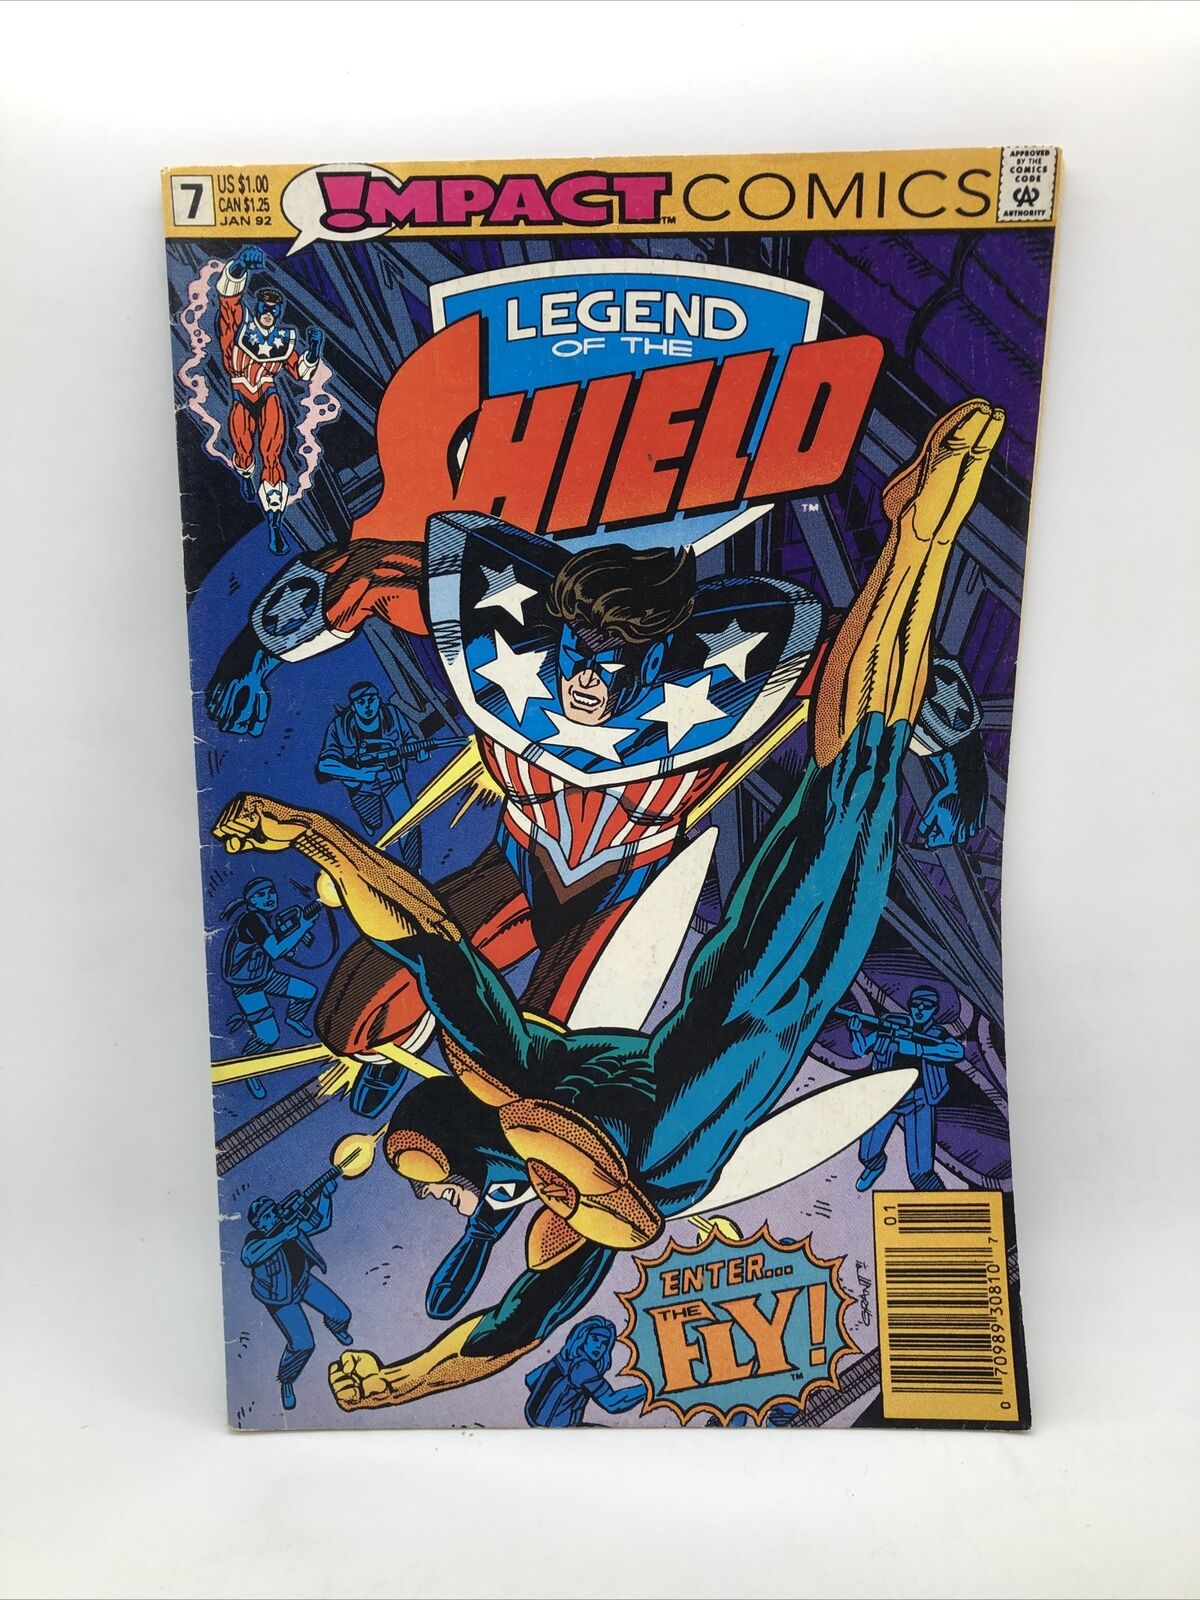 THE LEGEND OF THE SHIELD Comic - No 7 - Date 01/1992 - Impact Comics